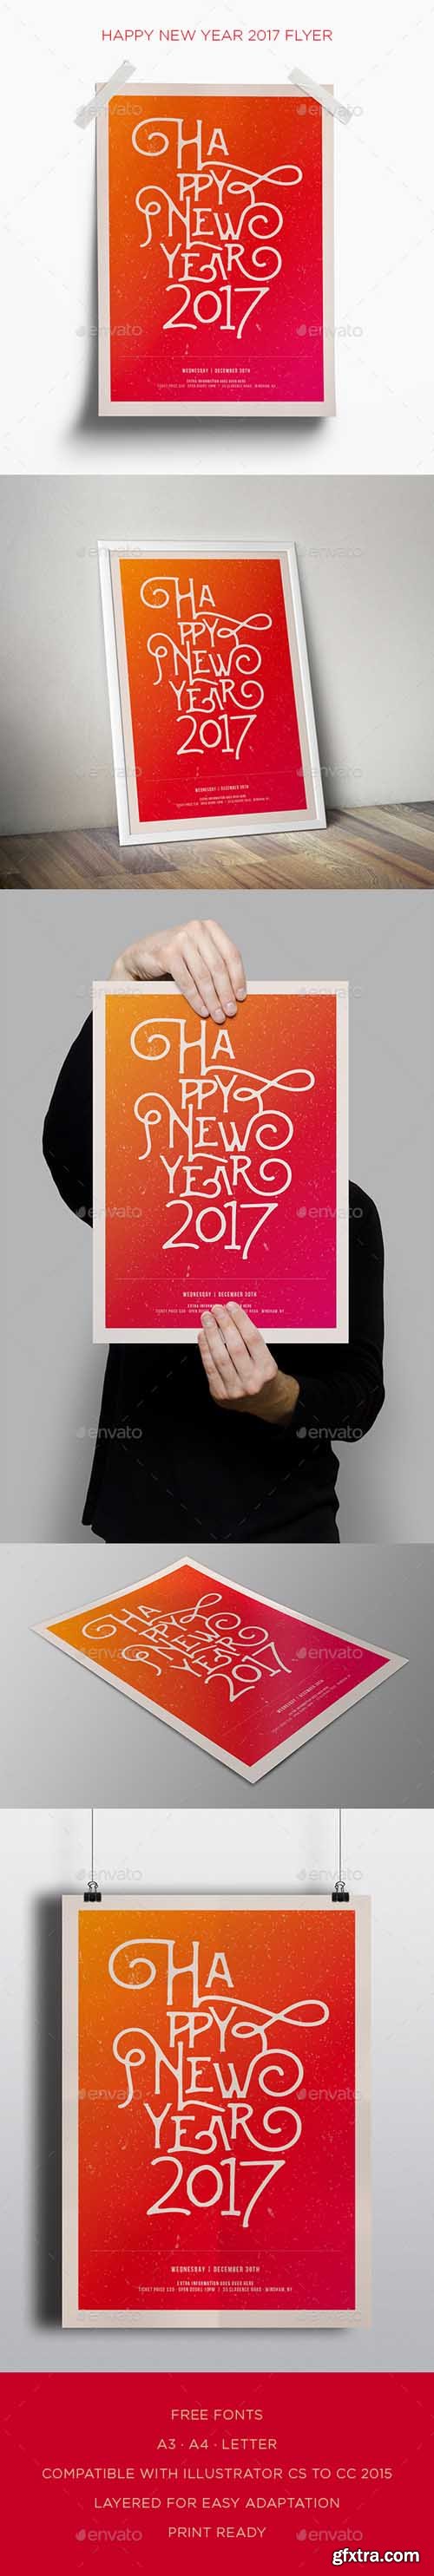 GR - Happy New Year 2017 Flyer 18255867